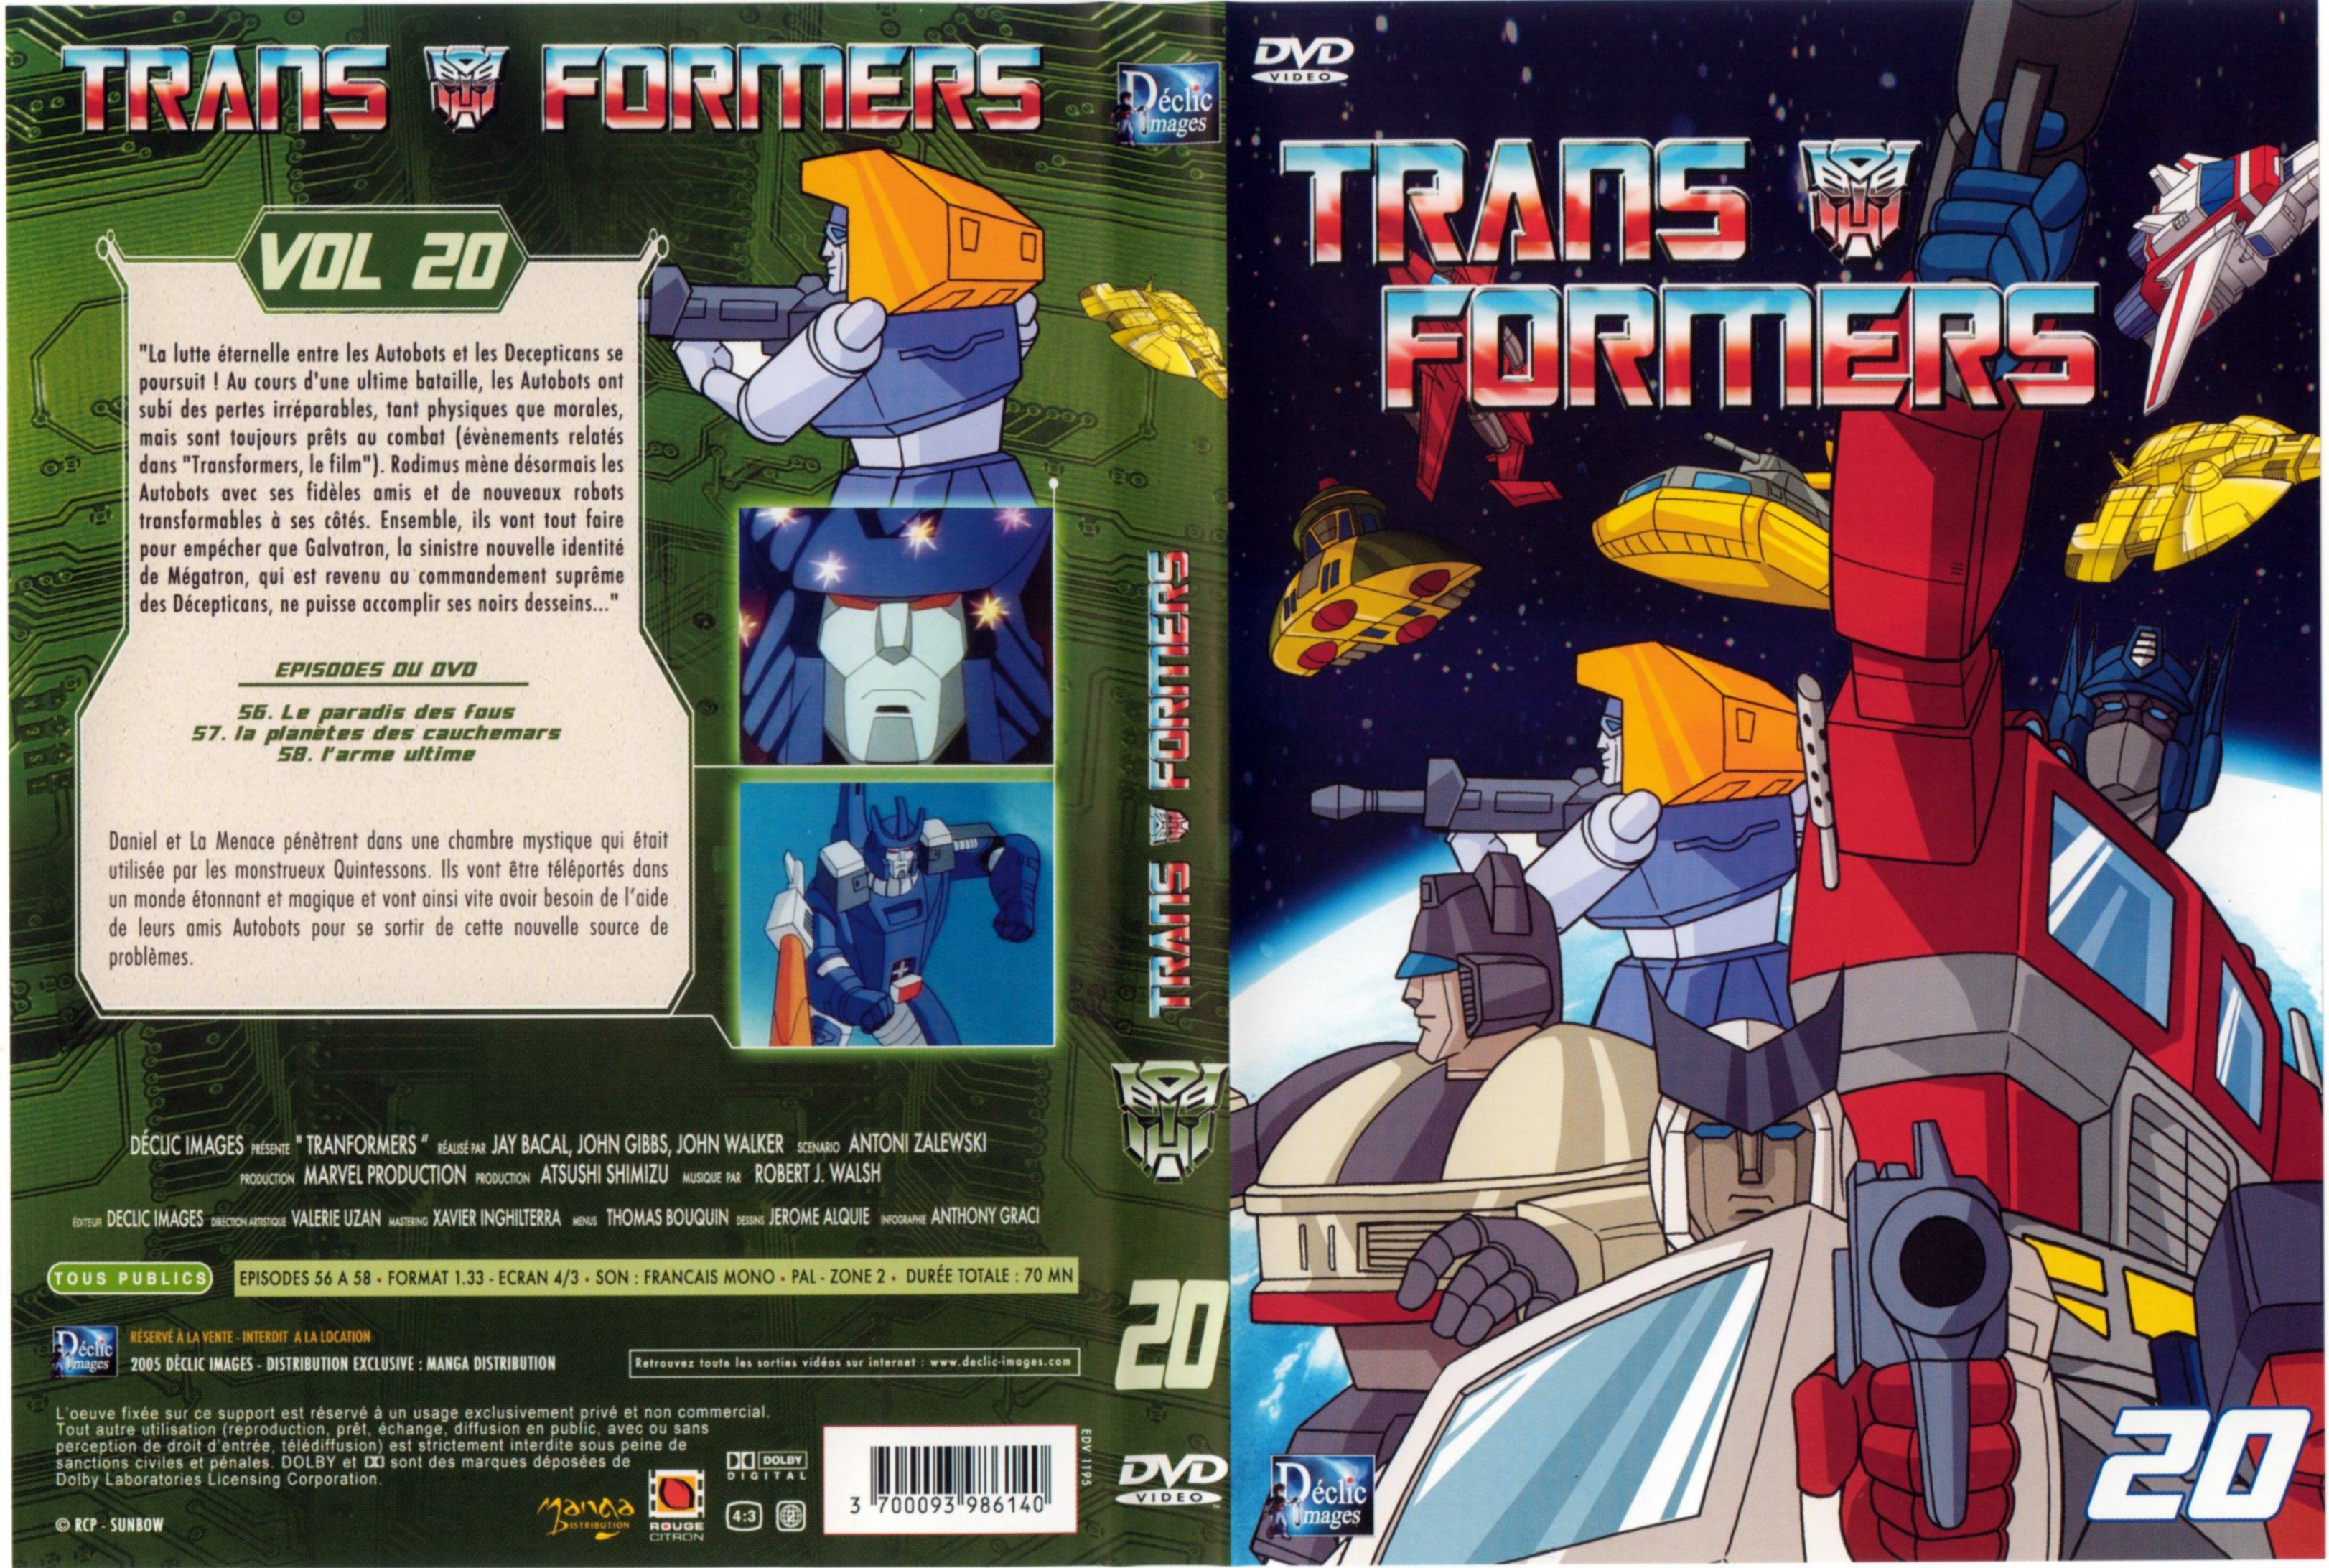 Jaquette DVD Transformers vol 20